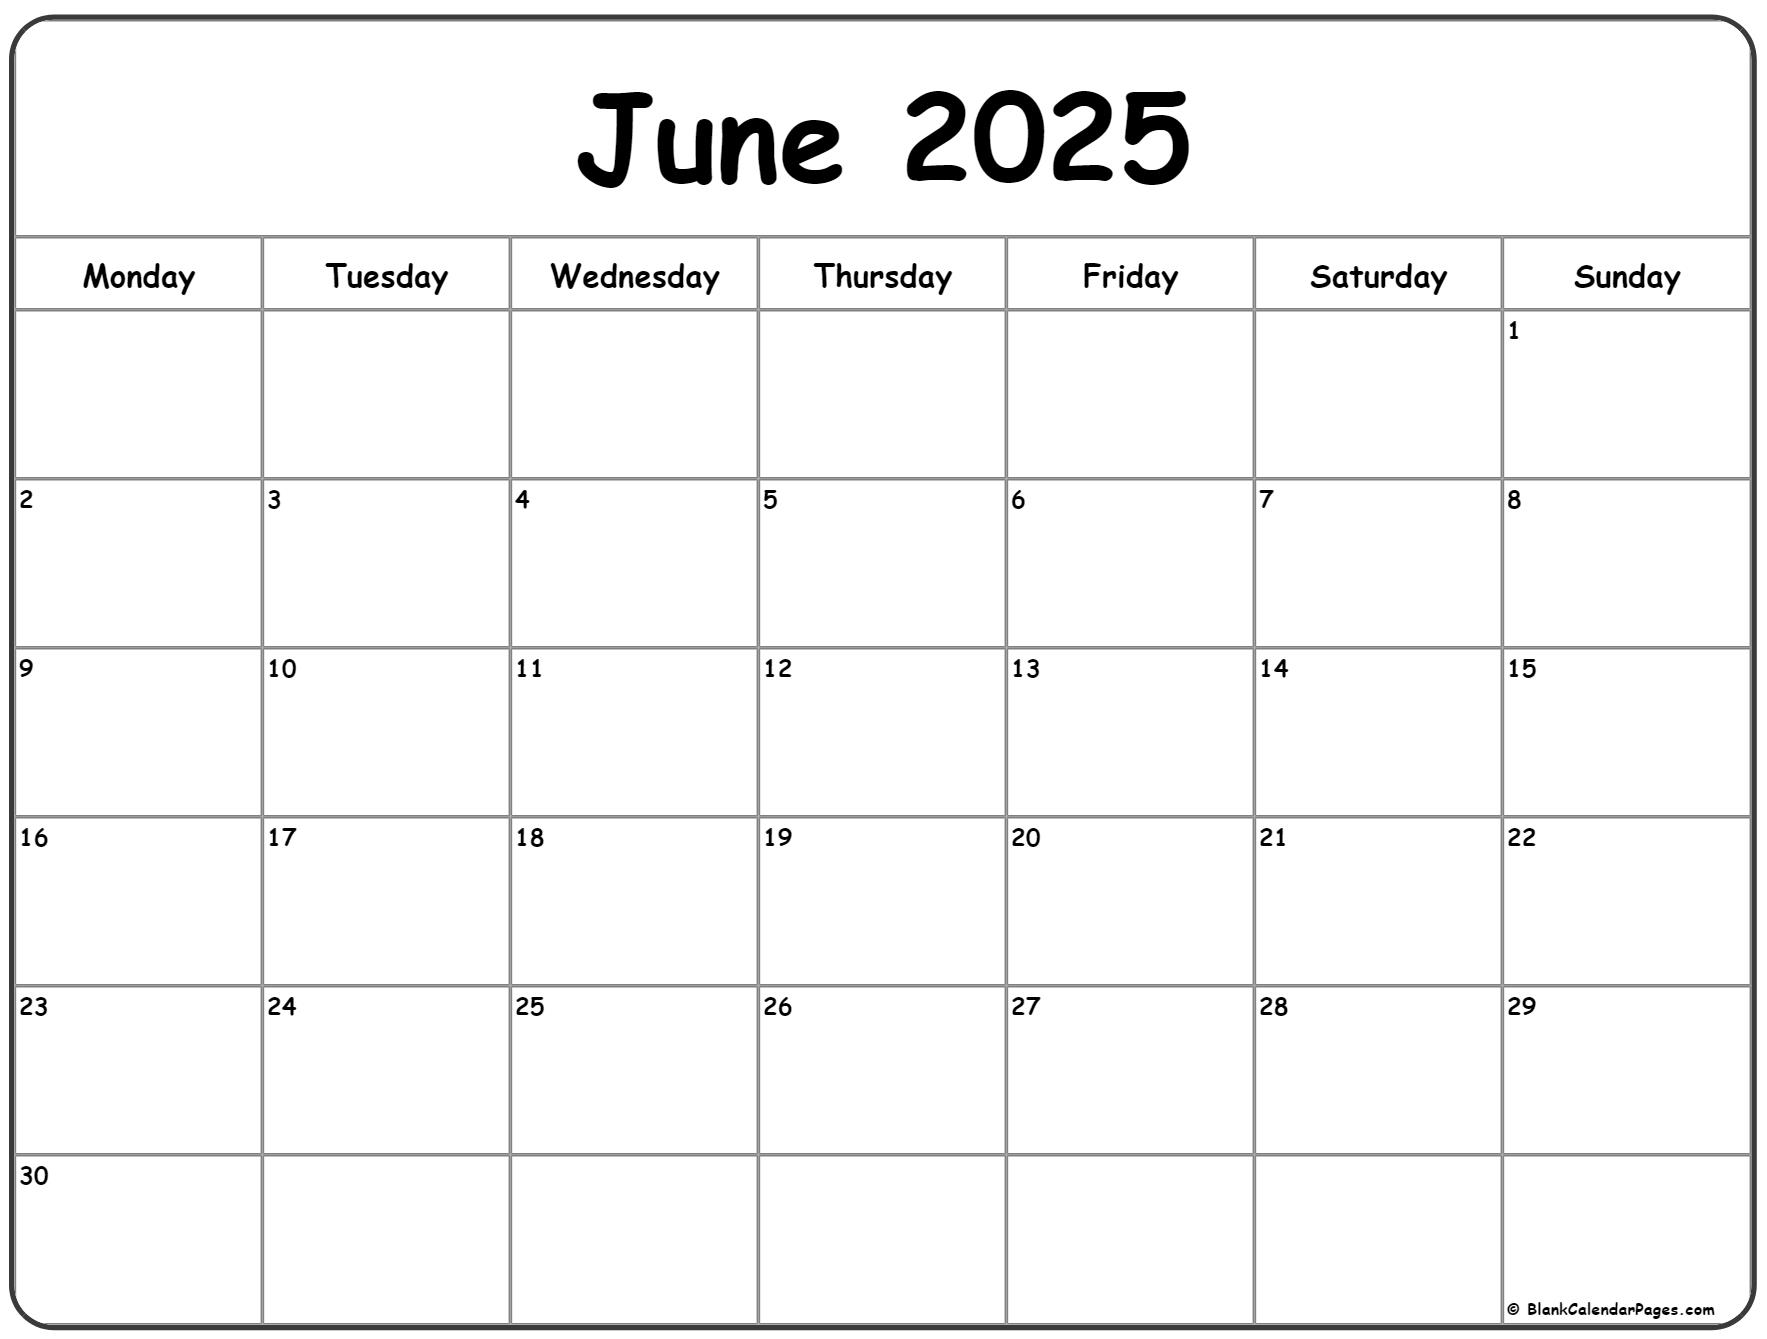 June 2025 Monday calendar. Monday to Sunday